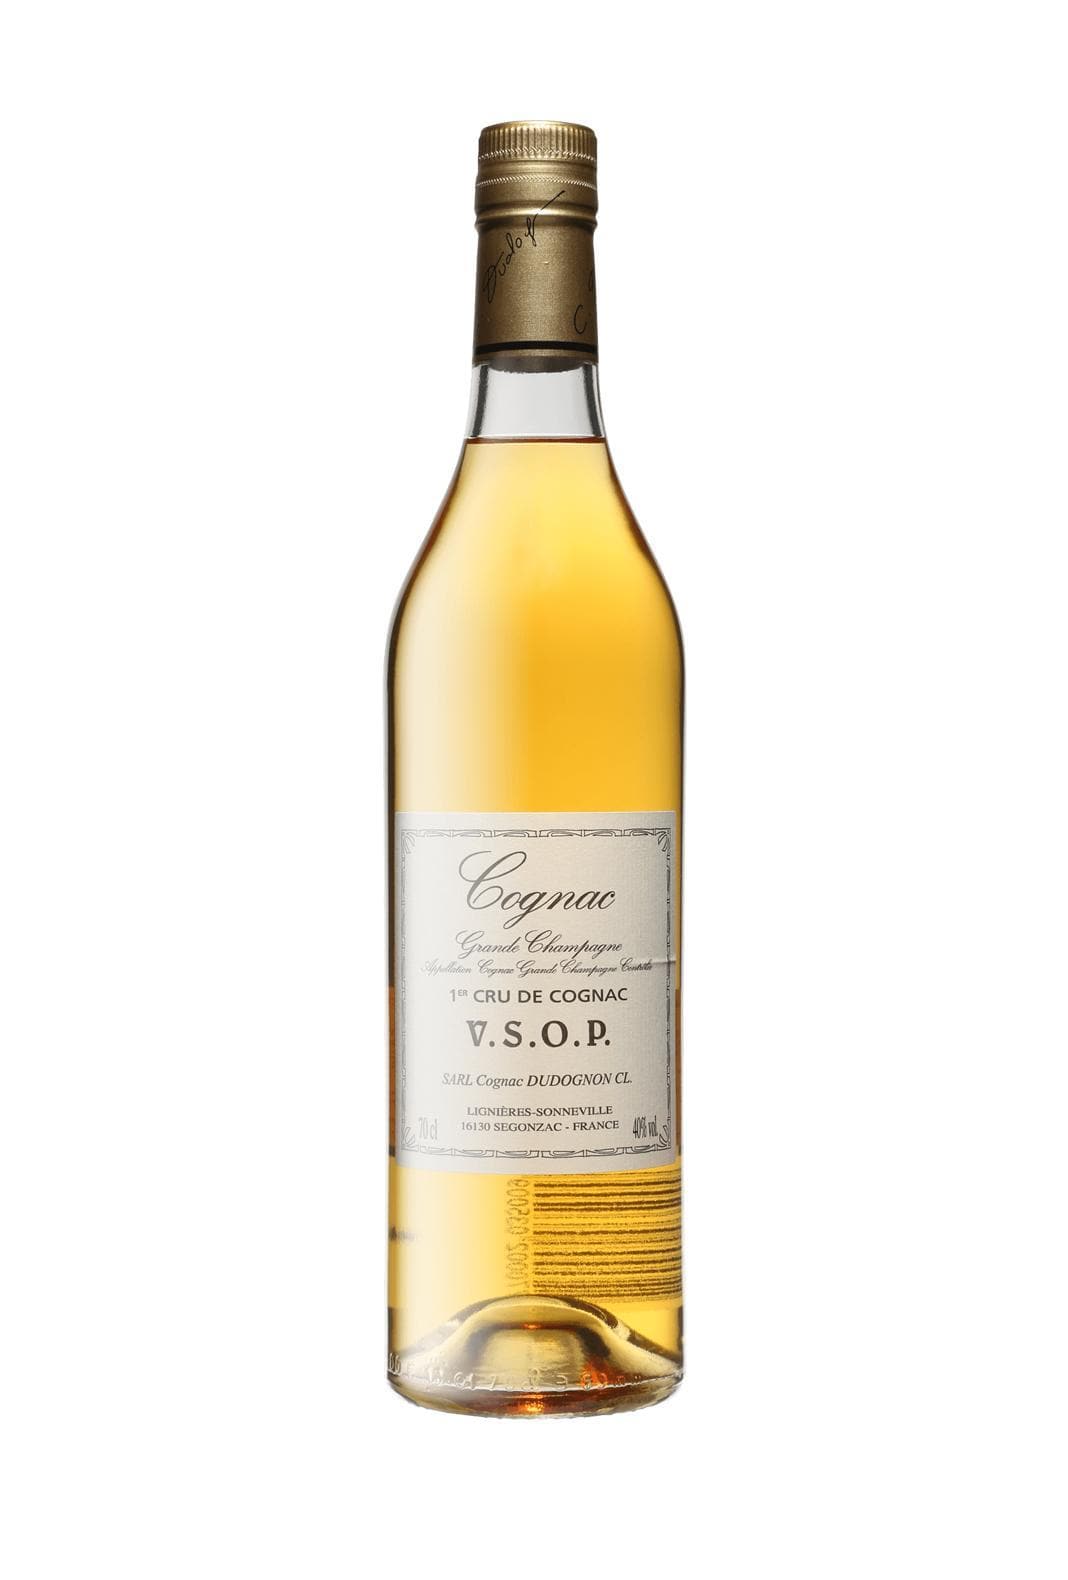 Dudognon Cognac VSOP 10 years 40% 700ml | Brandy | Shop online at Spirits of France